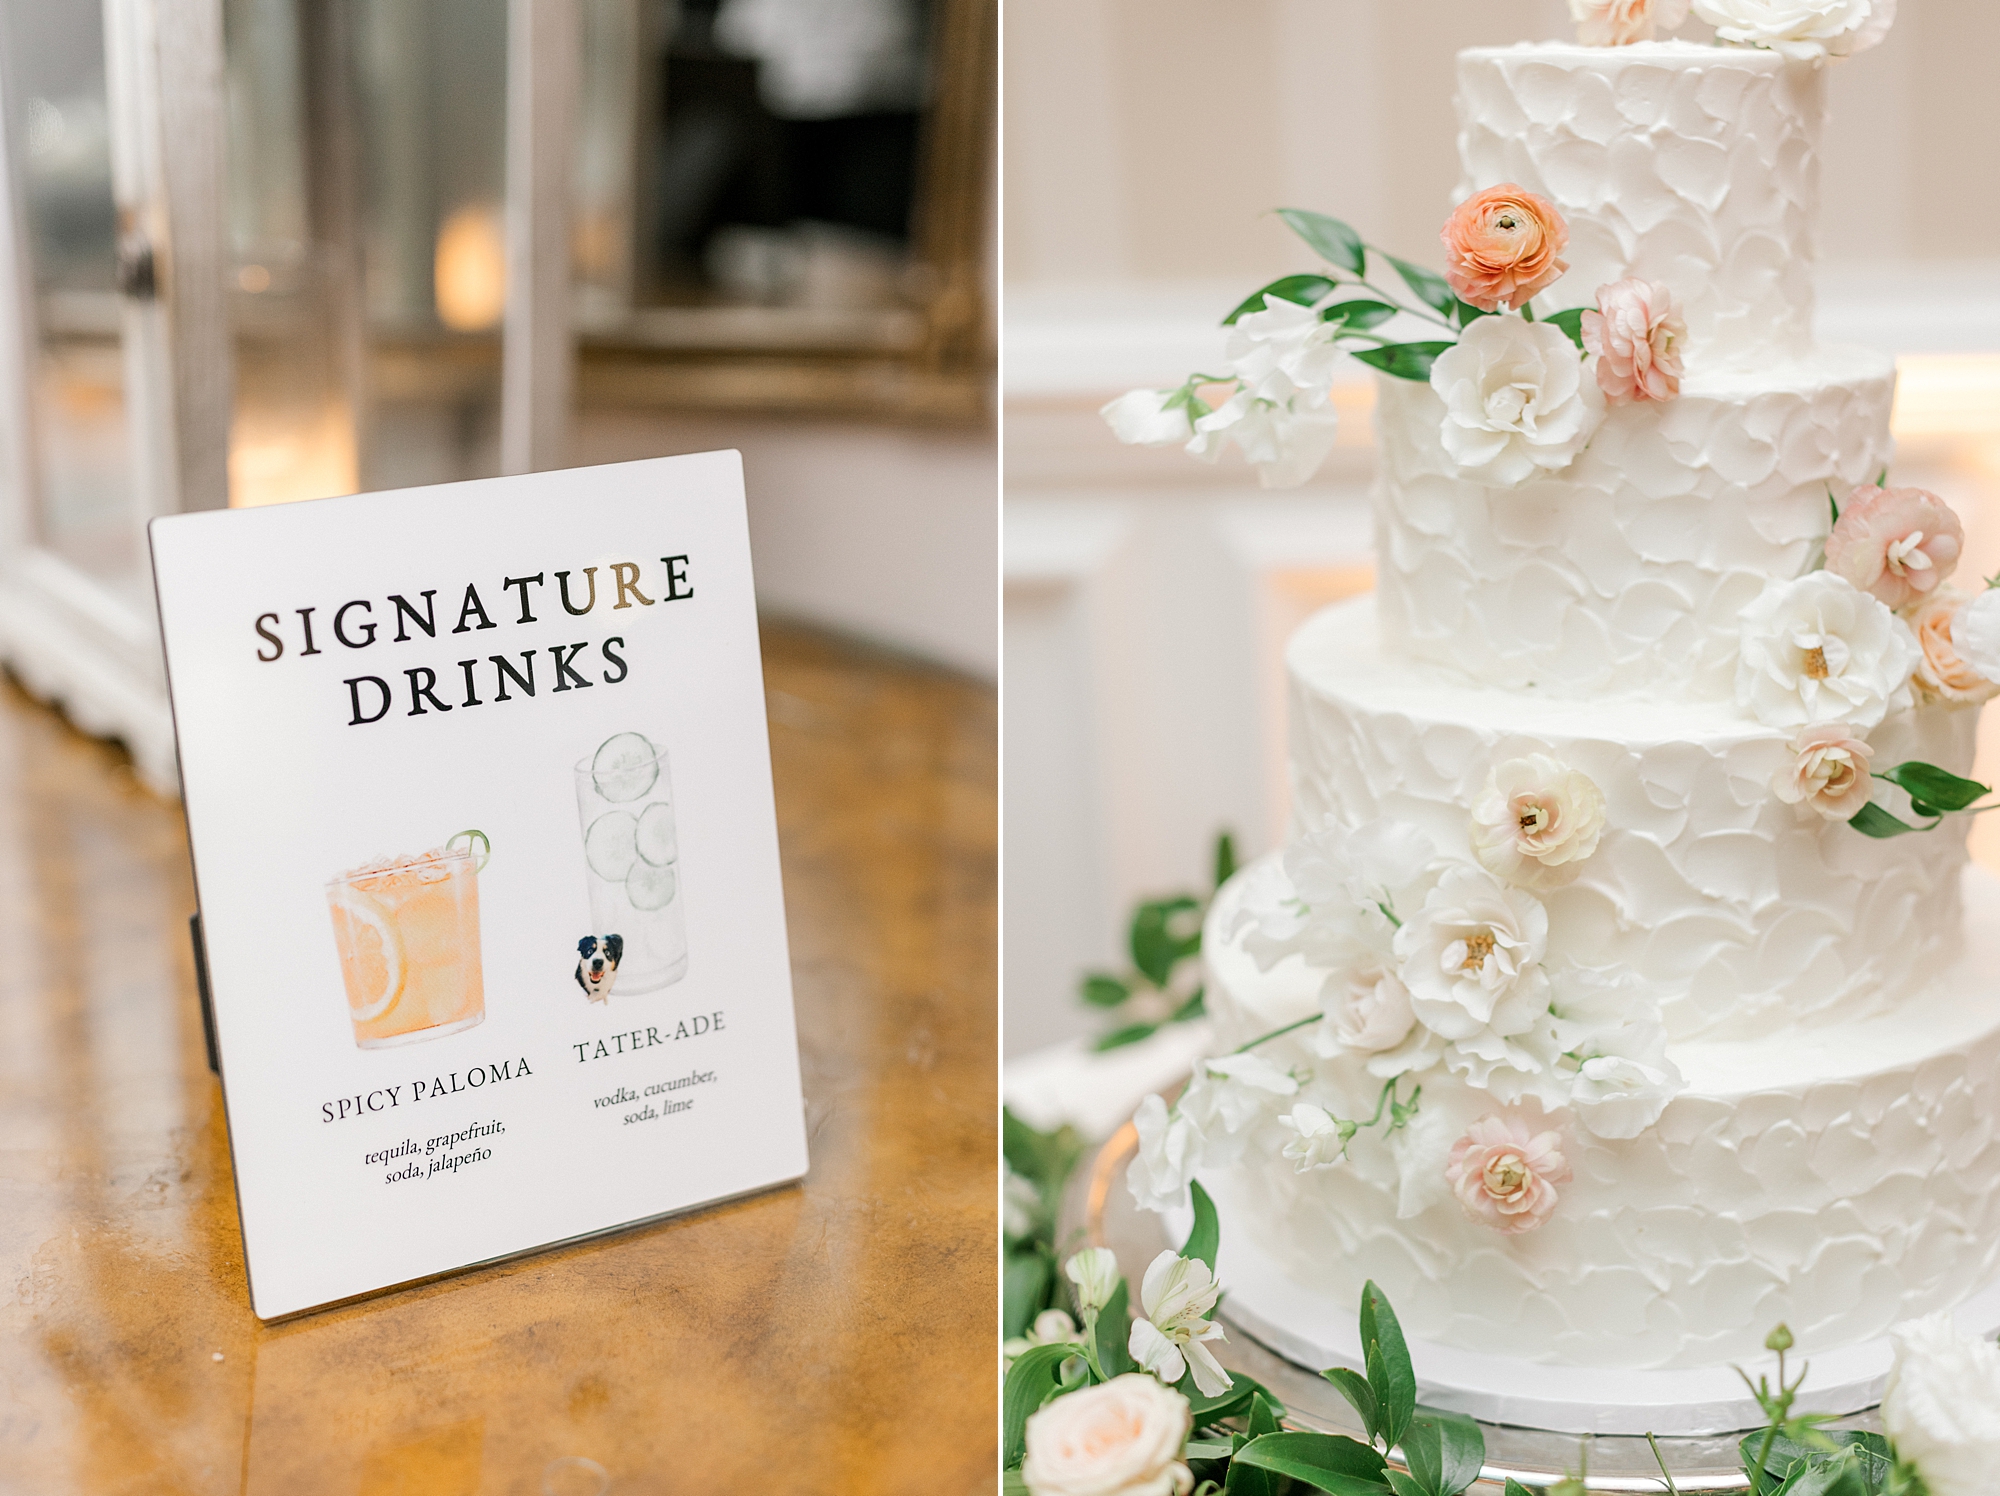 signature cocktail and tiered wedding cake for NJ wedding reception at Mallard Island Yacht Club